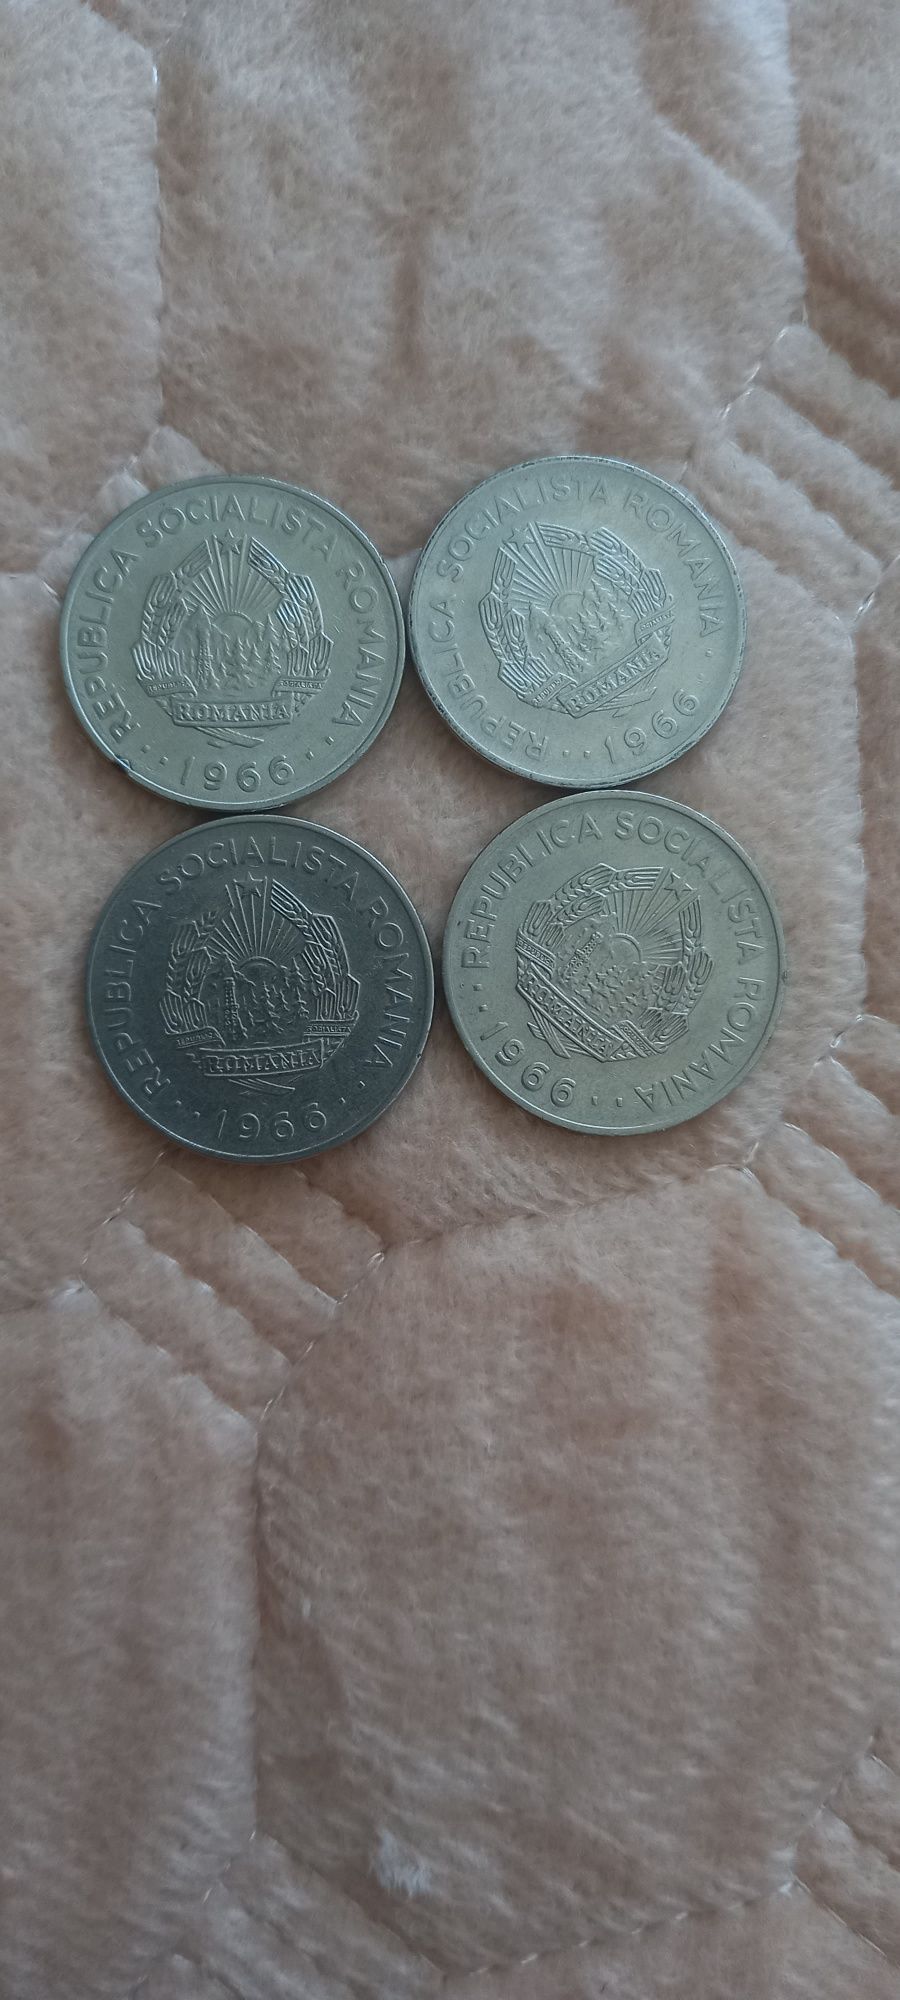 Monede de 1 leu din 1966